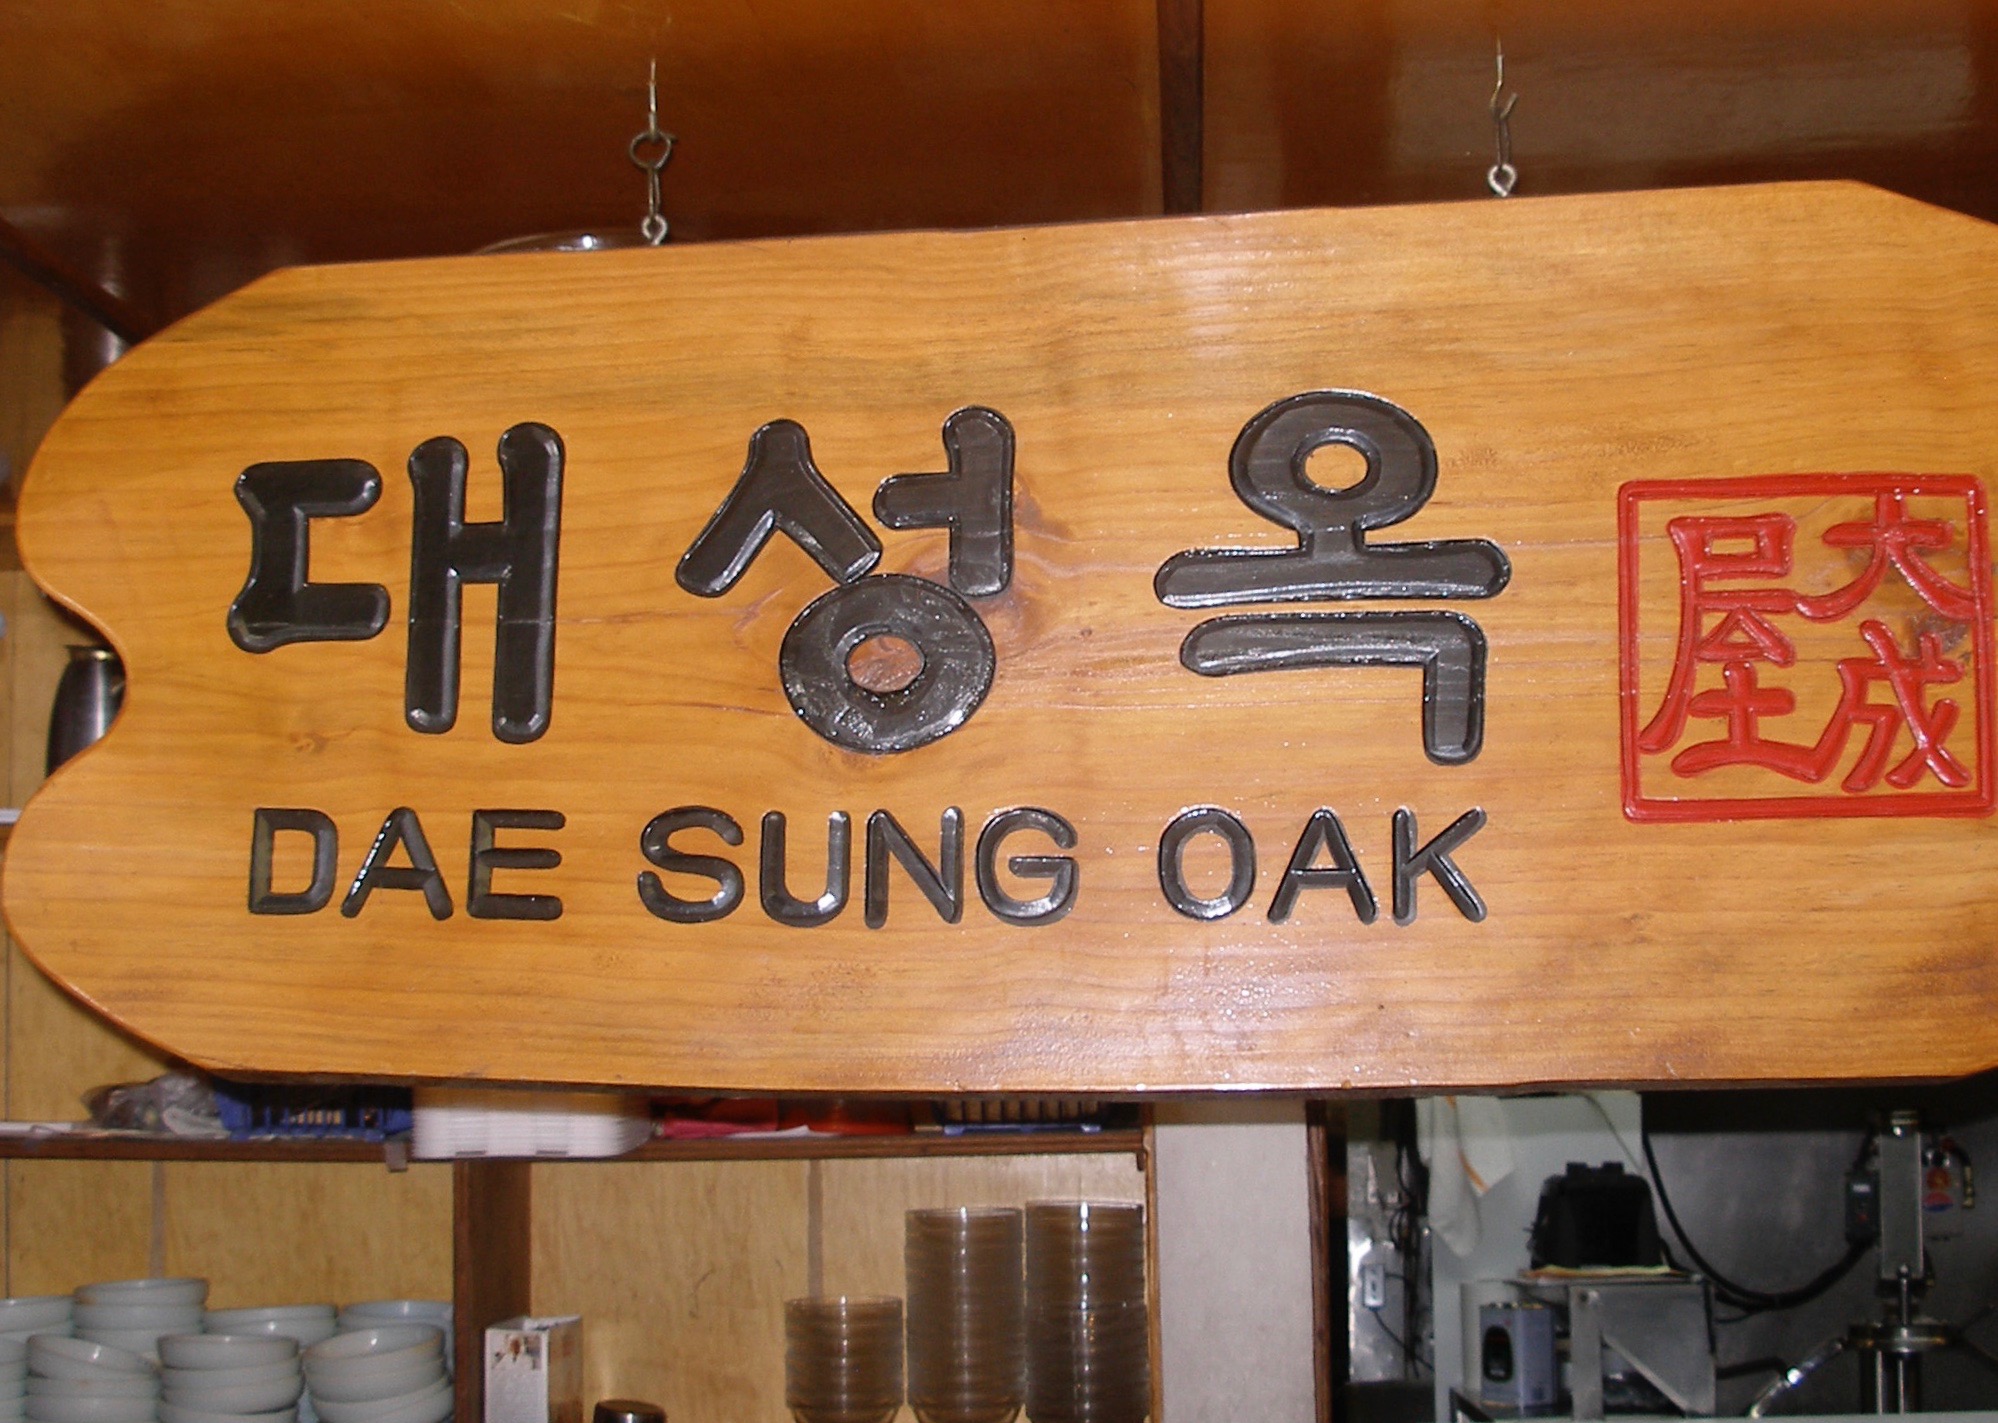 Korean Restaurant Sign Los Angeles